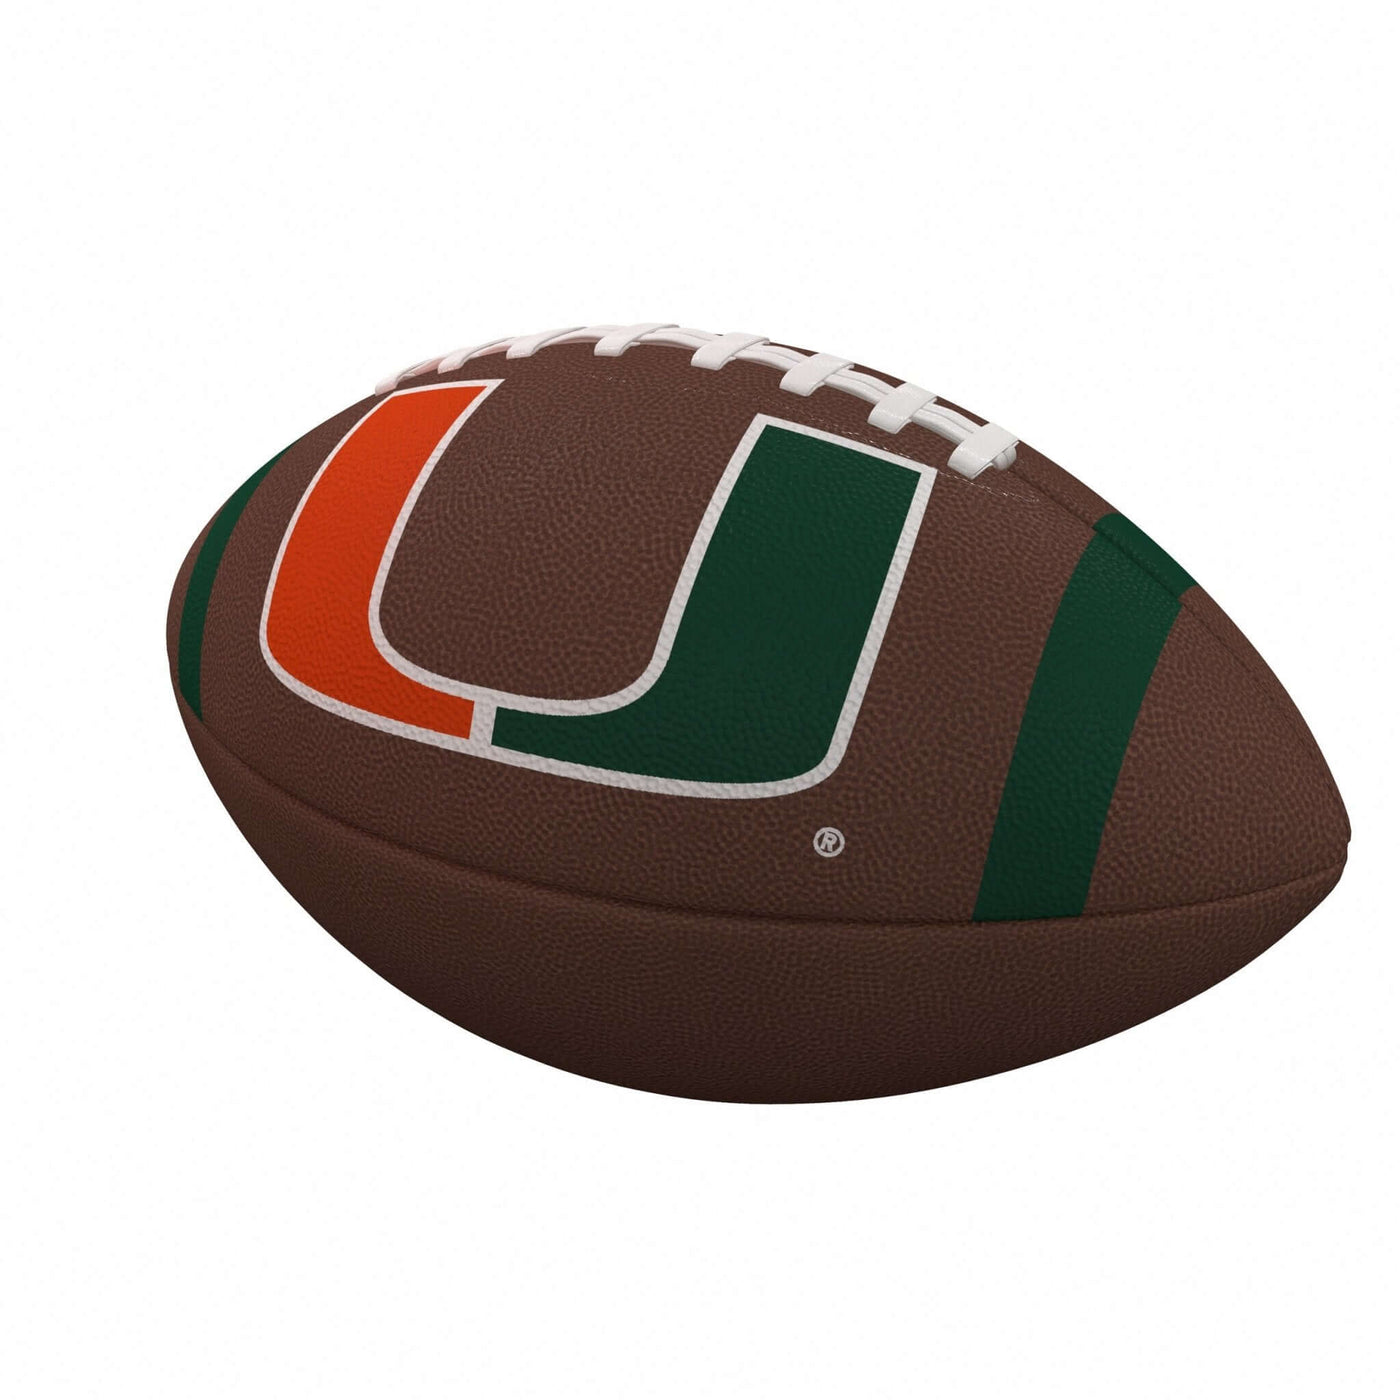 Miami Team Stripe Official-Size Composite Football - Logo Brands